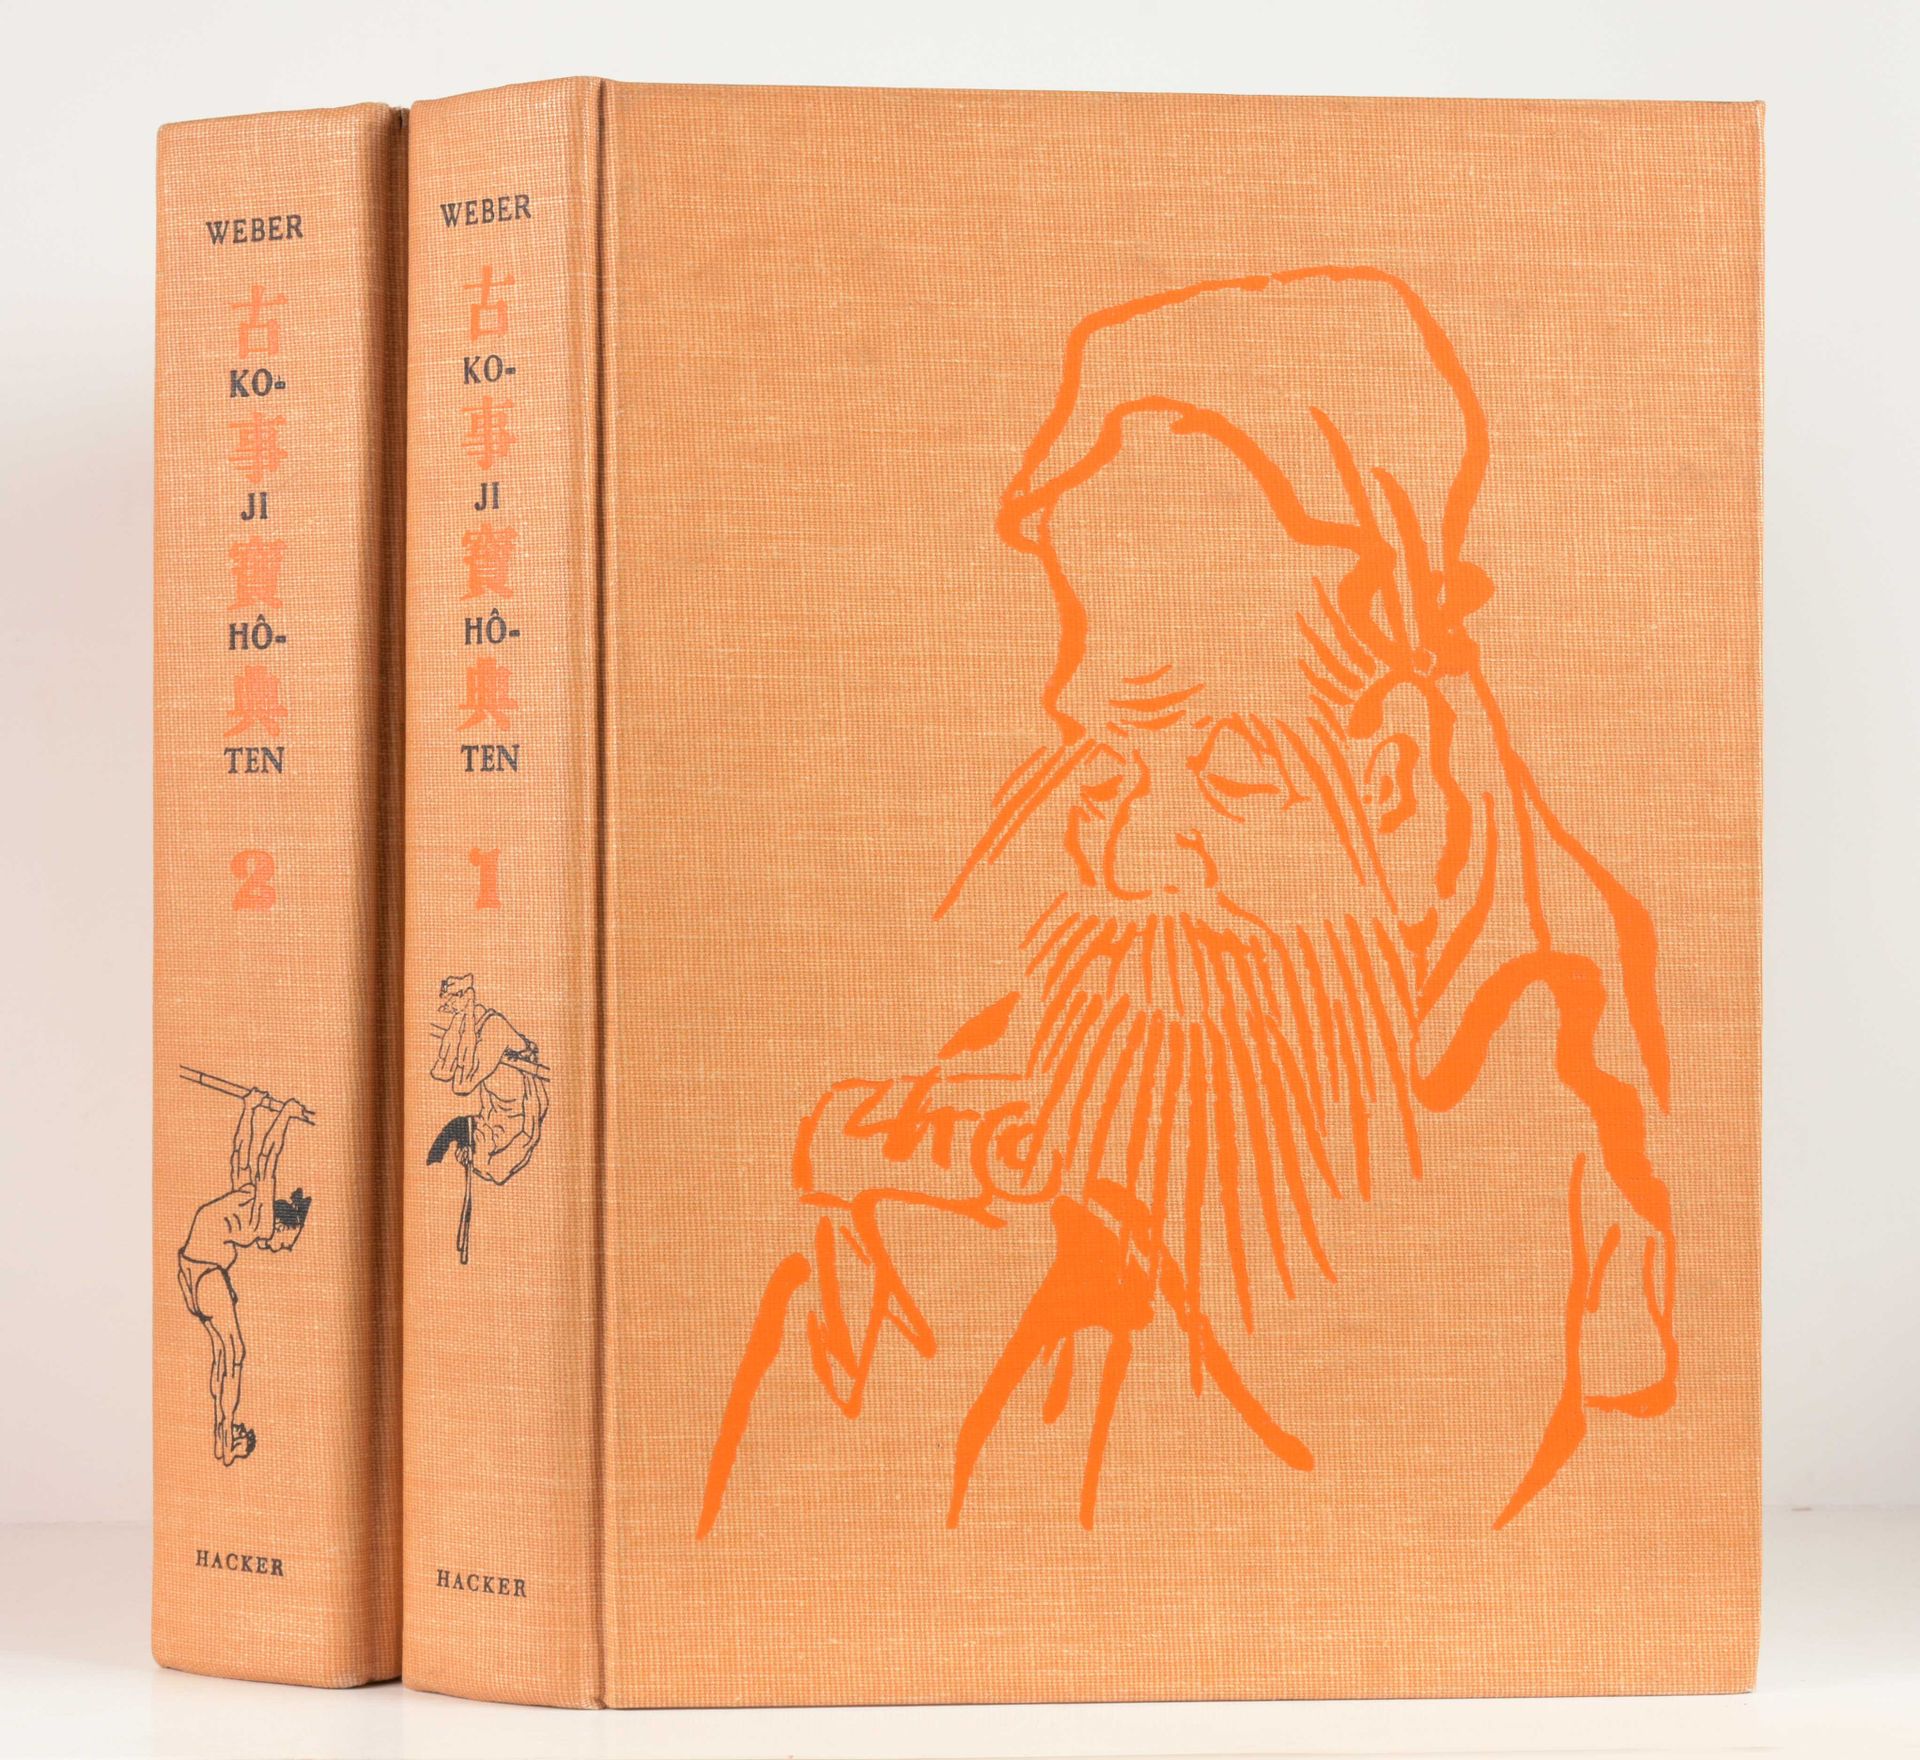 WEBER, V.F. 柯吉-霍特姆。供日本和中国艺术品的业余爱好者和收藏家使用的词典

2 vol. In-4°, 511, 511, 137, 4 pp,i&hellip;